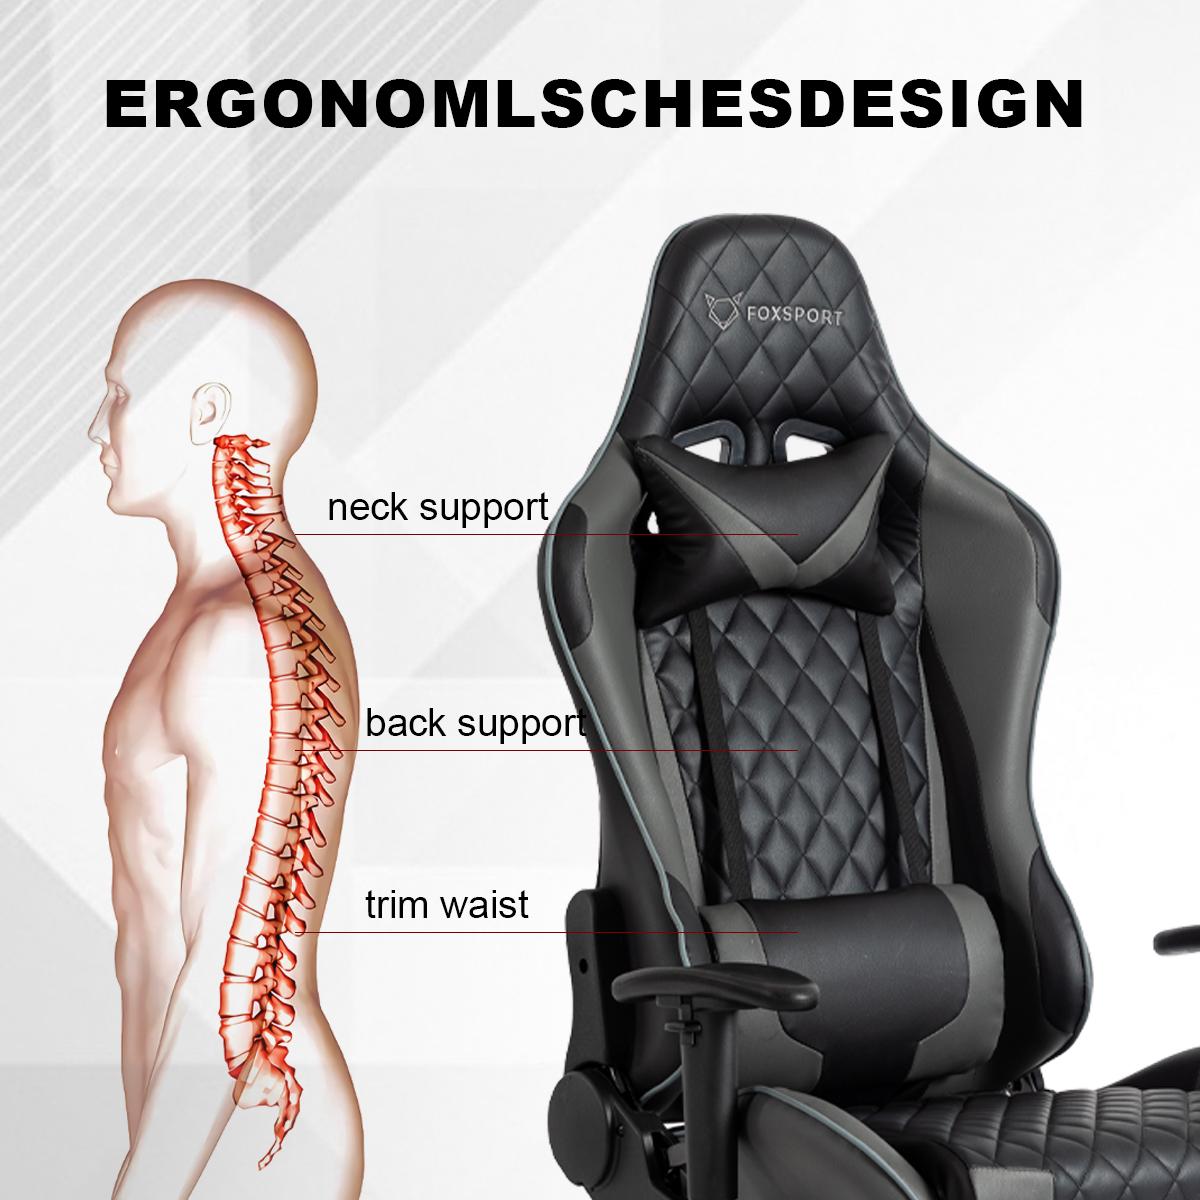 FOXSPORT gaming leg schwarz rest black chair with Gaming-Stuhl